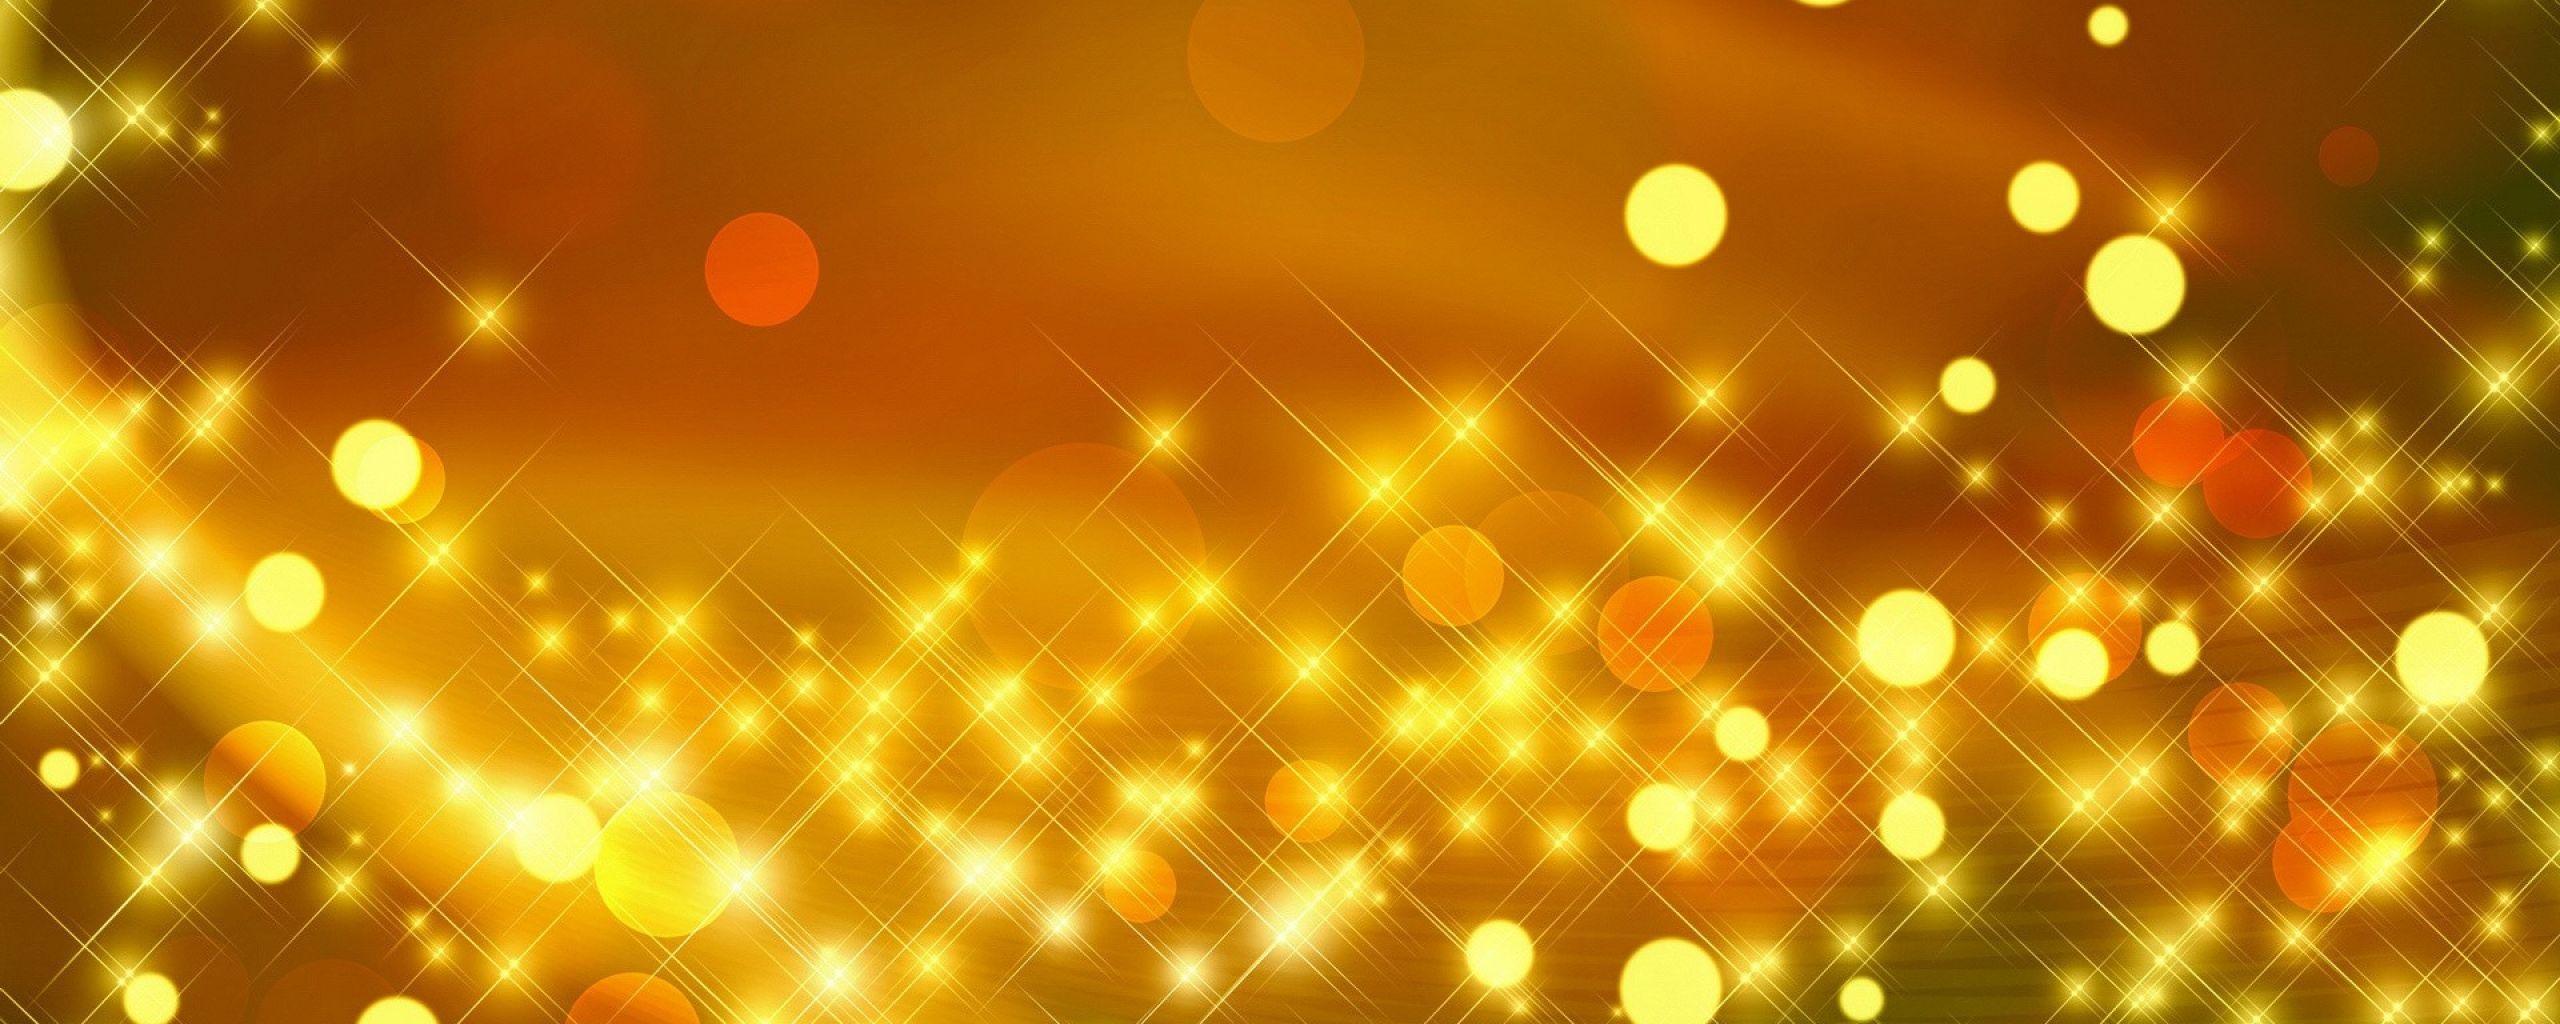 Light Gold Background HD Wallpaper, Background Image